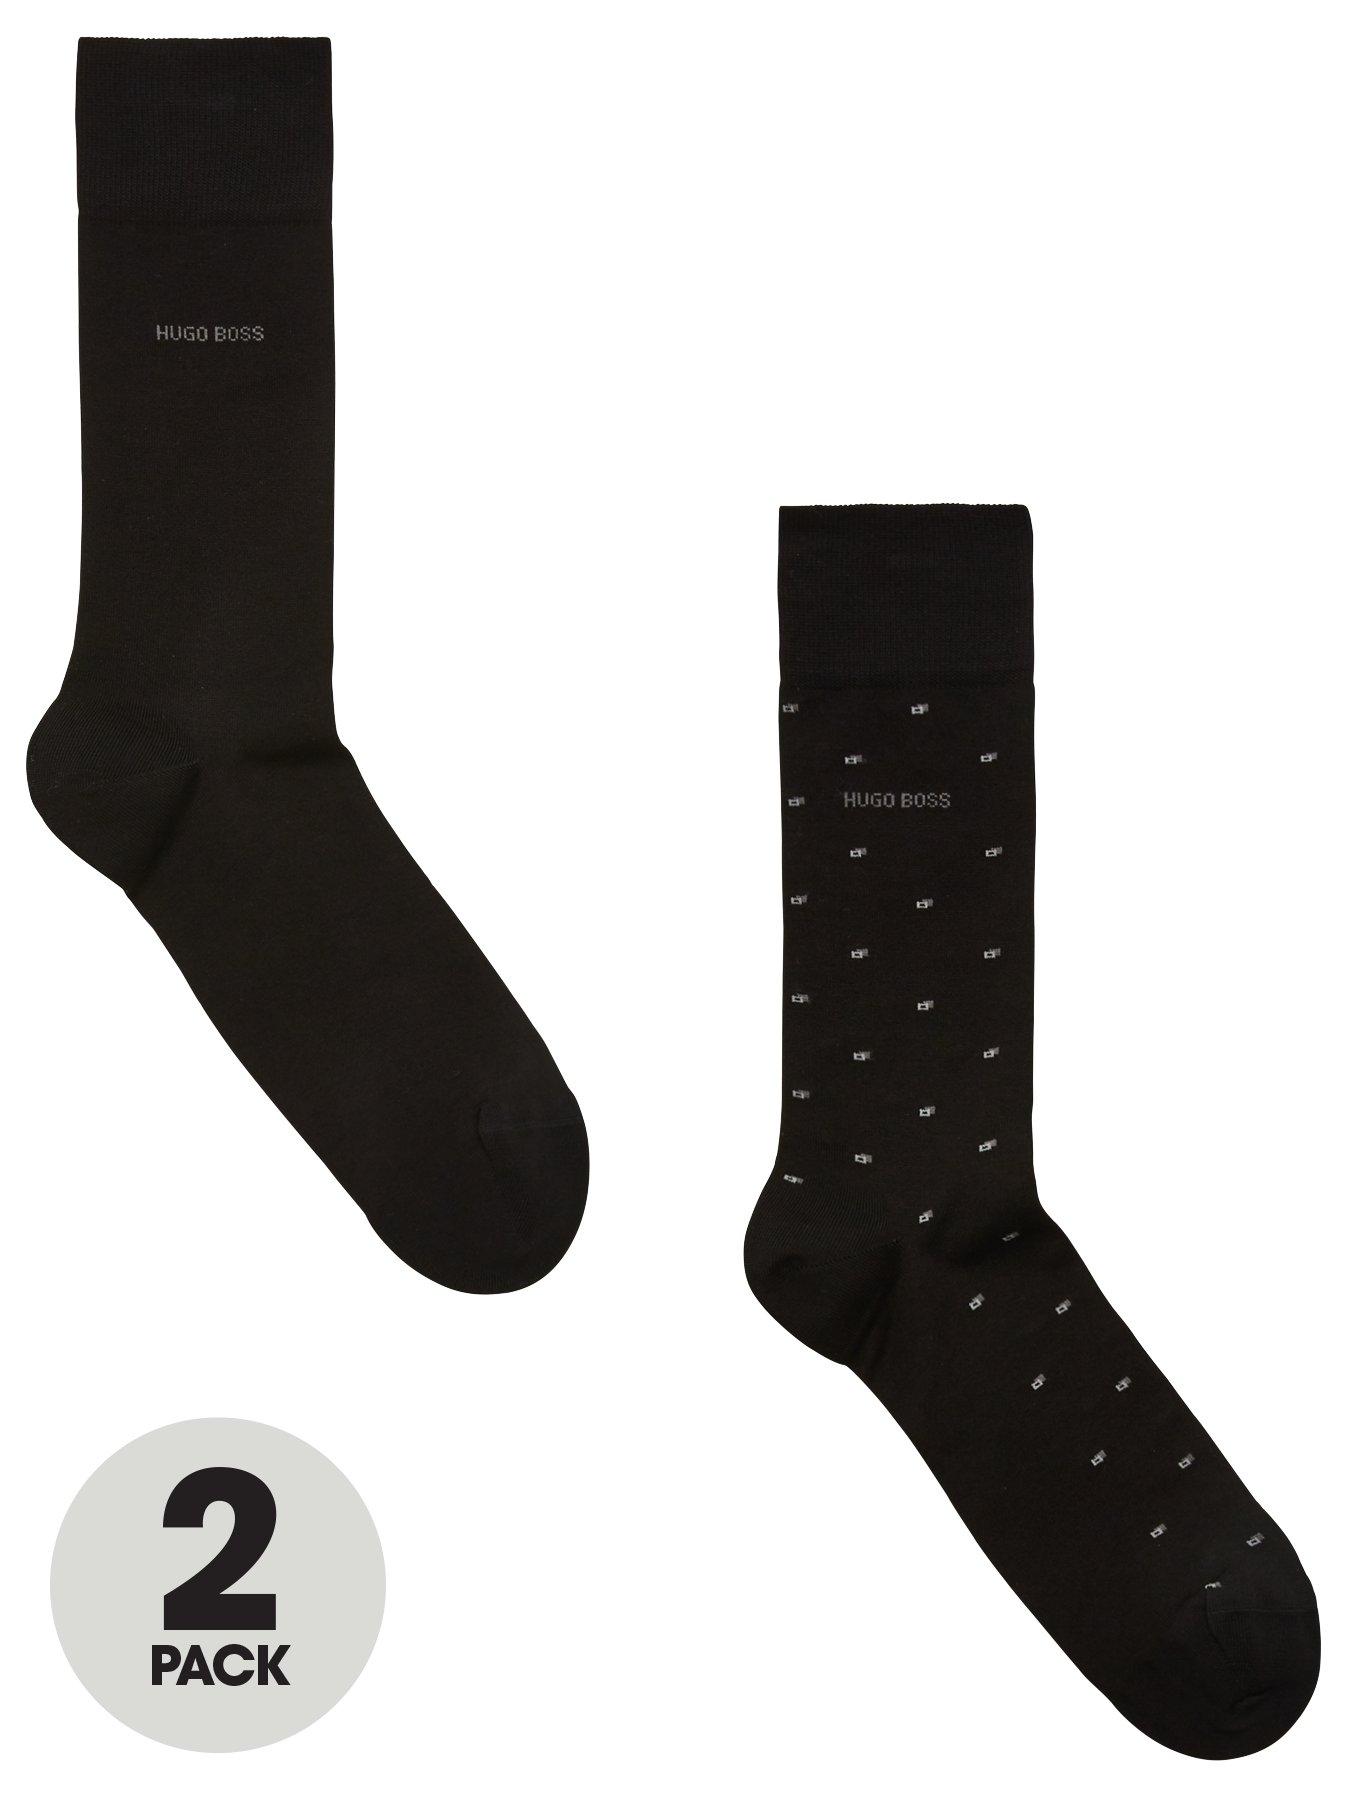 New HUGO BOSS Men socks Black Color Classic Dress US Size 7-9,10 pairs